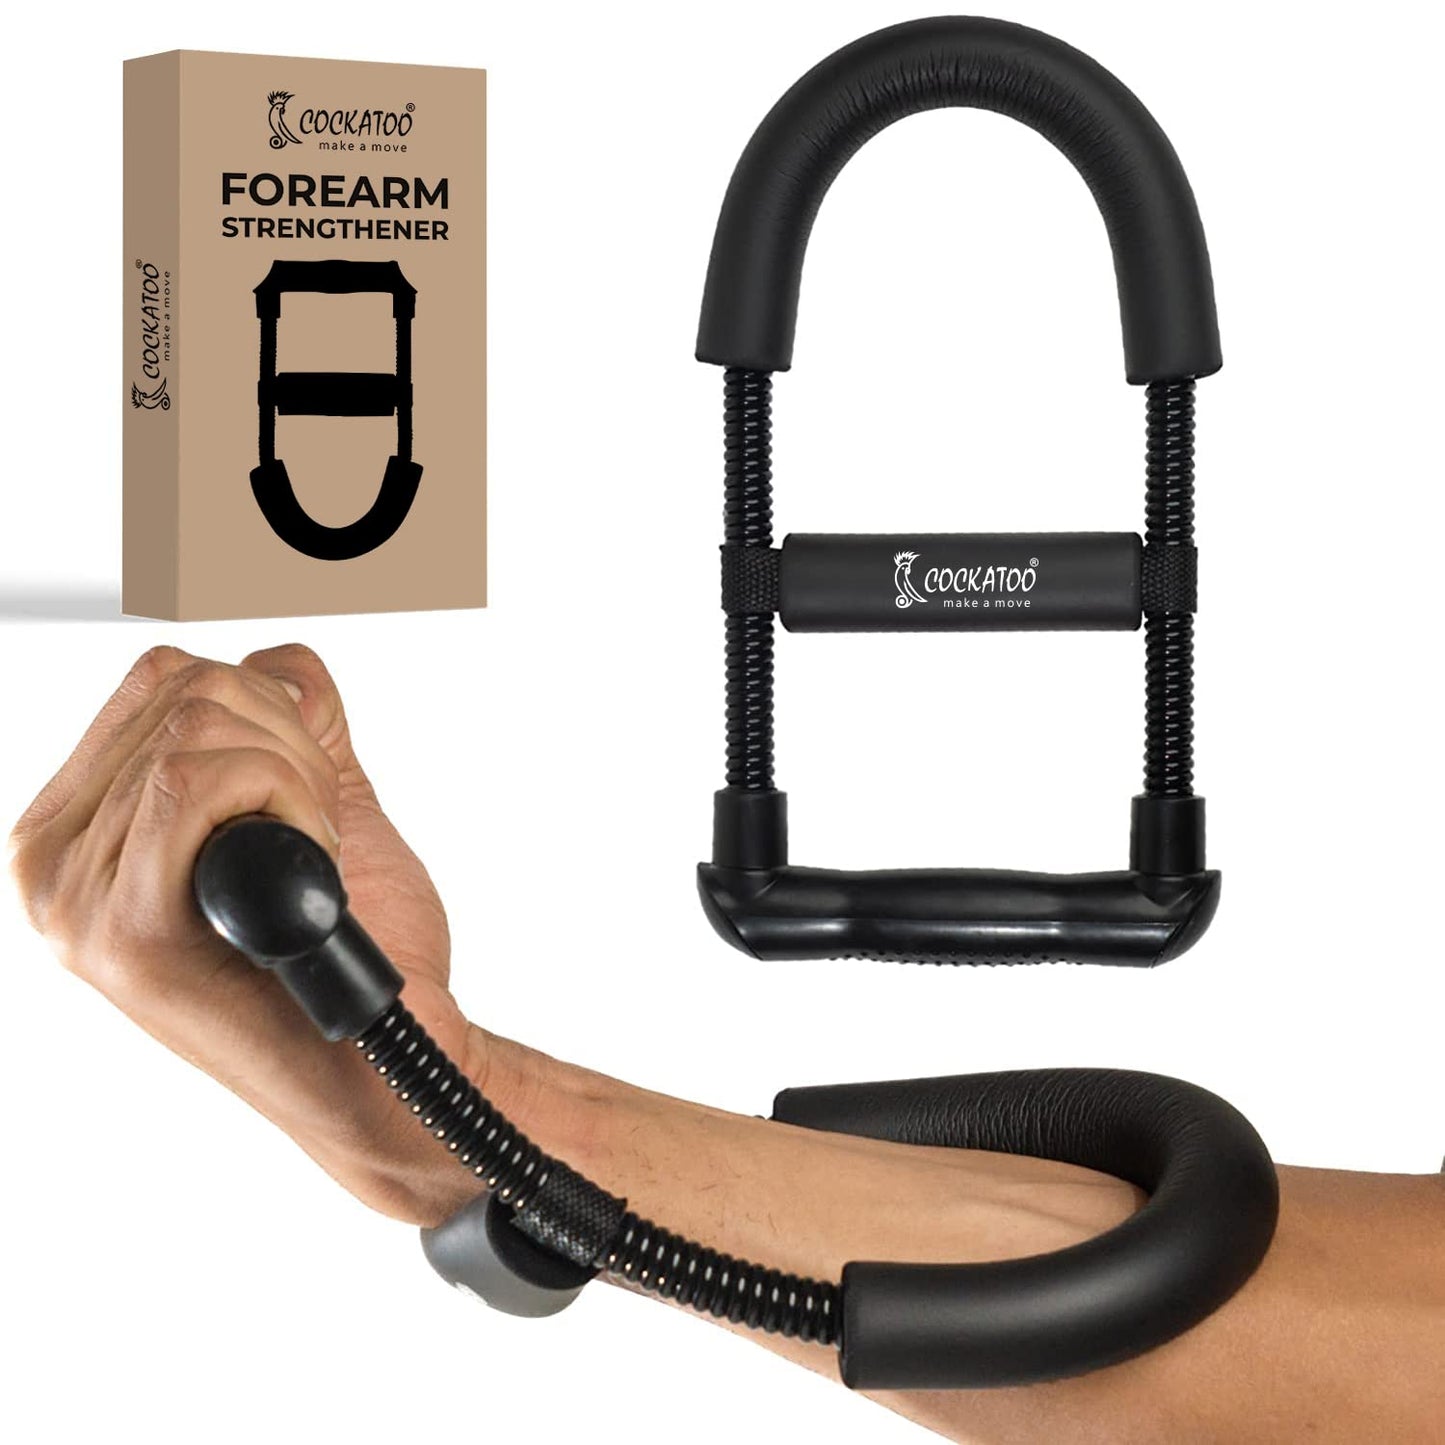 Cockatoo Forearm Strengthener,Forearm Exercise Equipment,Grip Strengthener Fitness Equipment Home Gym Equipment for Men & Gym Equipment for Women,Wrist Strengthener (6 Month Warranty)